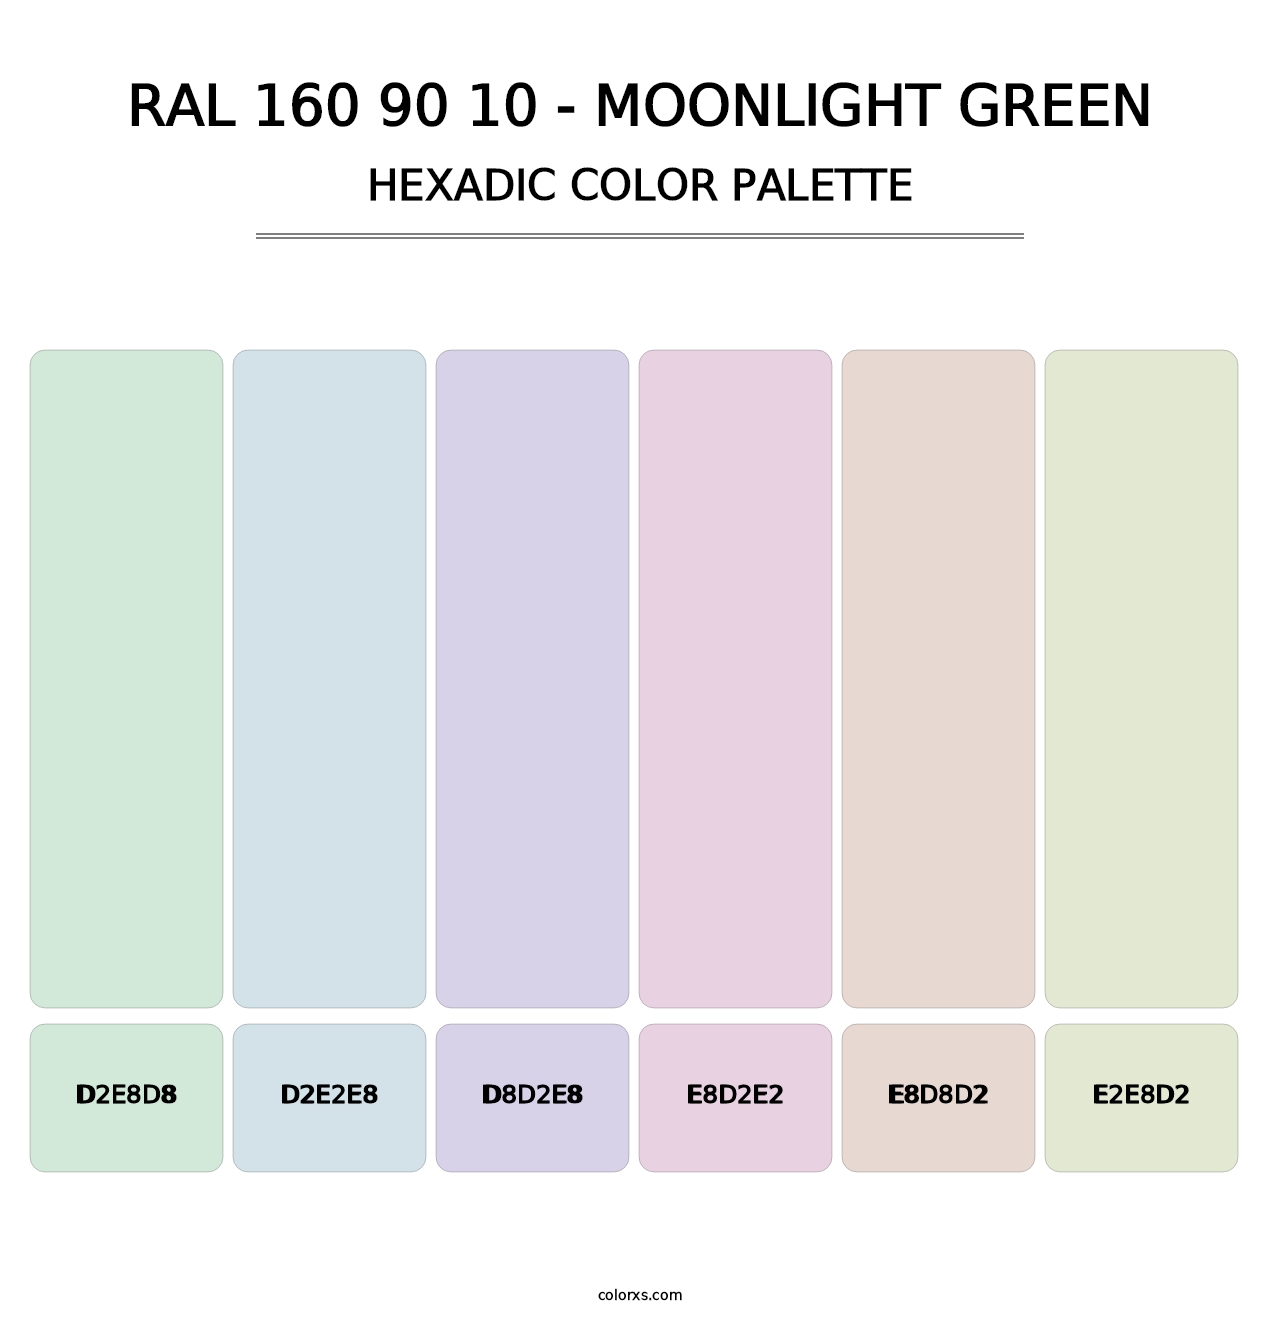 RAL 160 90 10 - Moonlight Green - Hexadic Color Palette